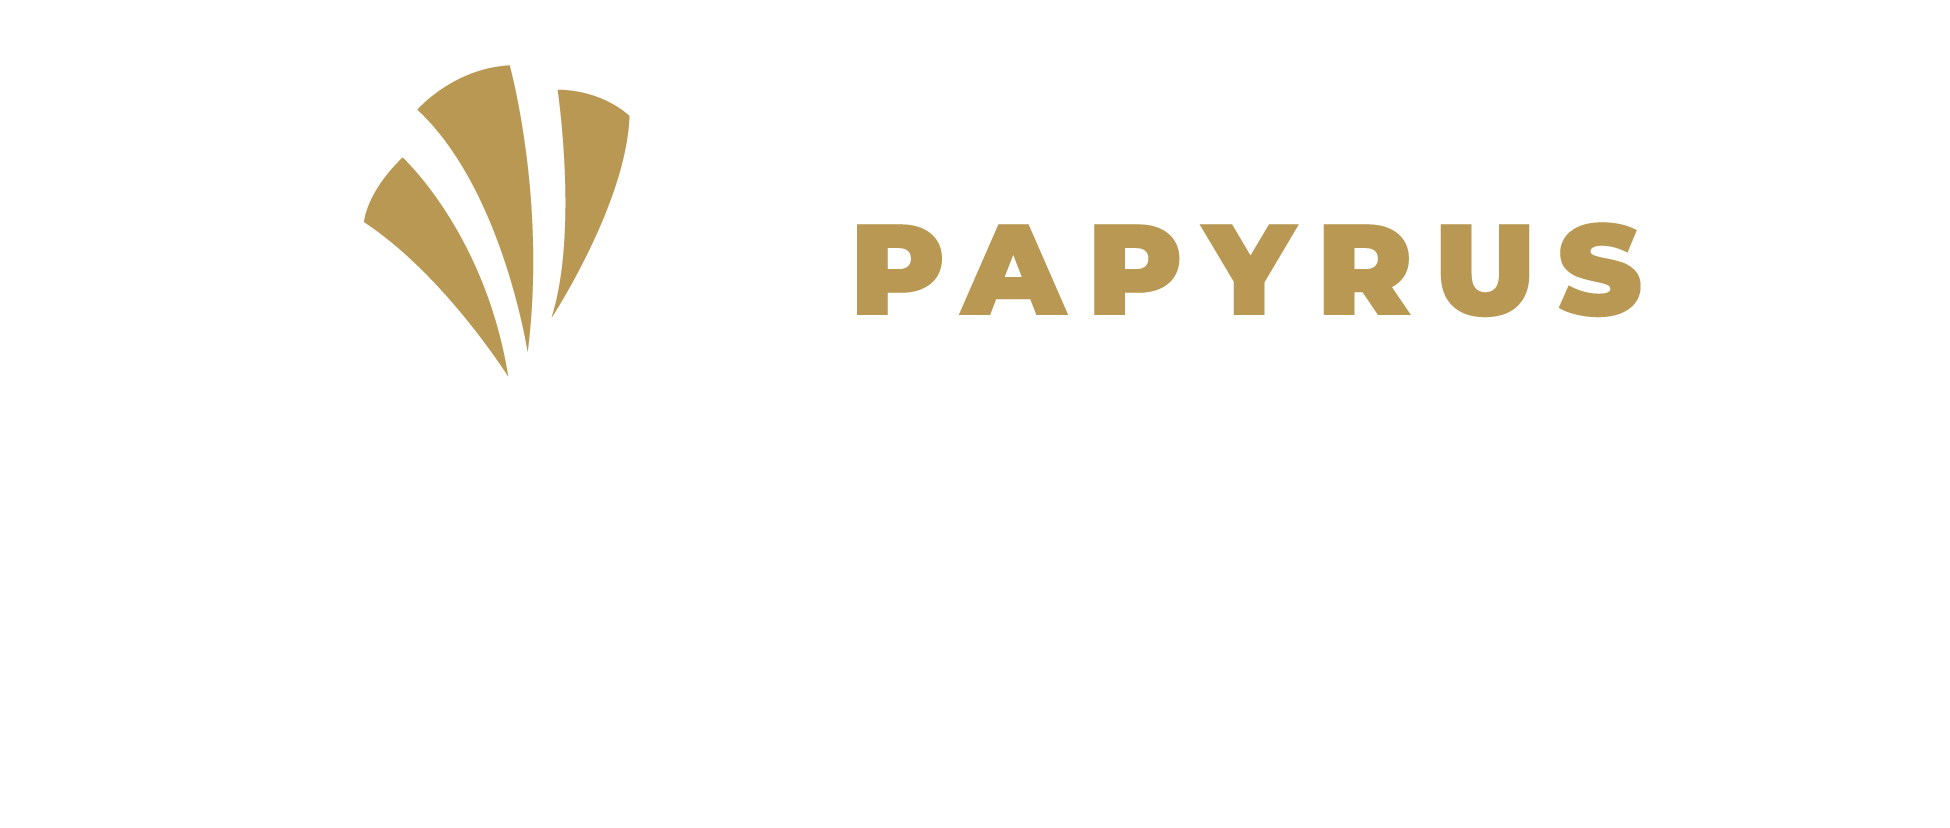 Papyrus Author